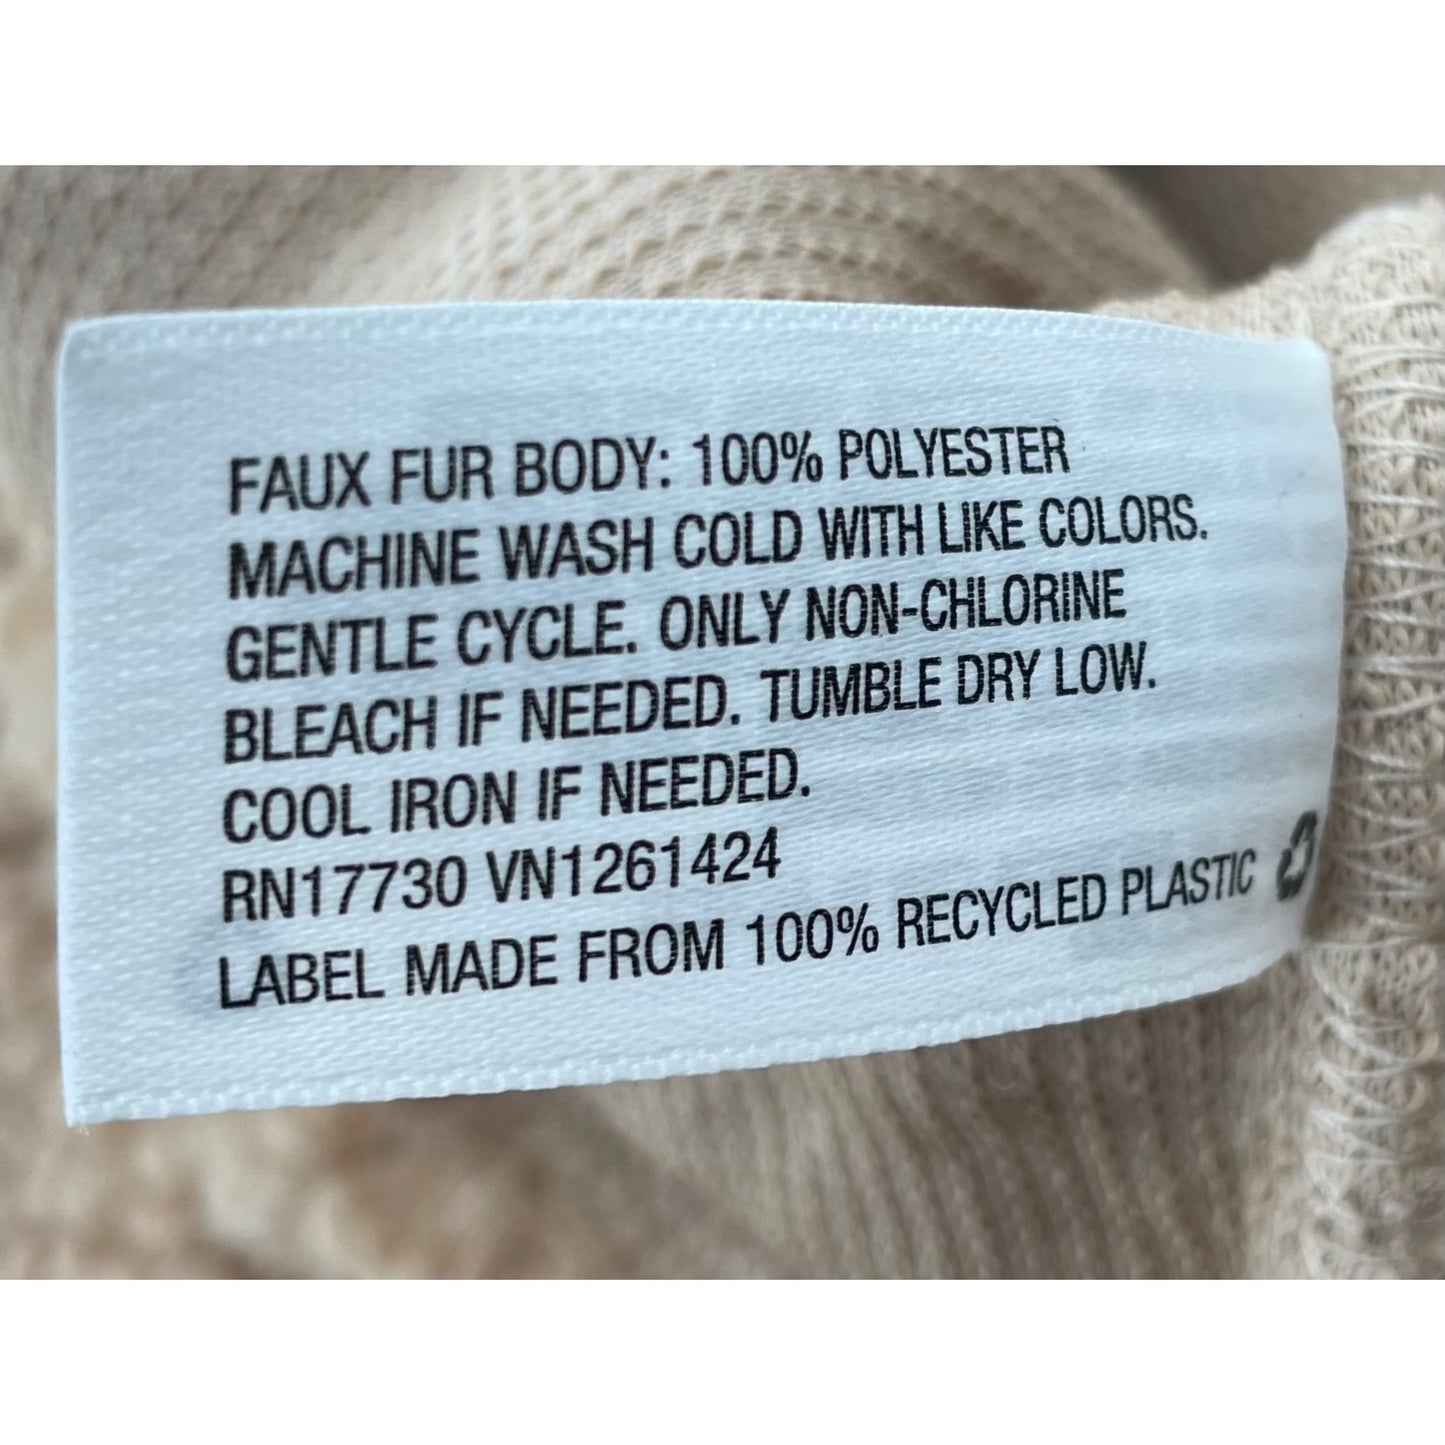 Wild Fable Women's Size XS Blush Pink/Mauve Teddy Faux Fur Crop Top Crew Neck Sweater